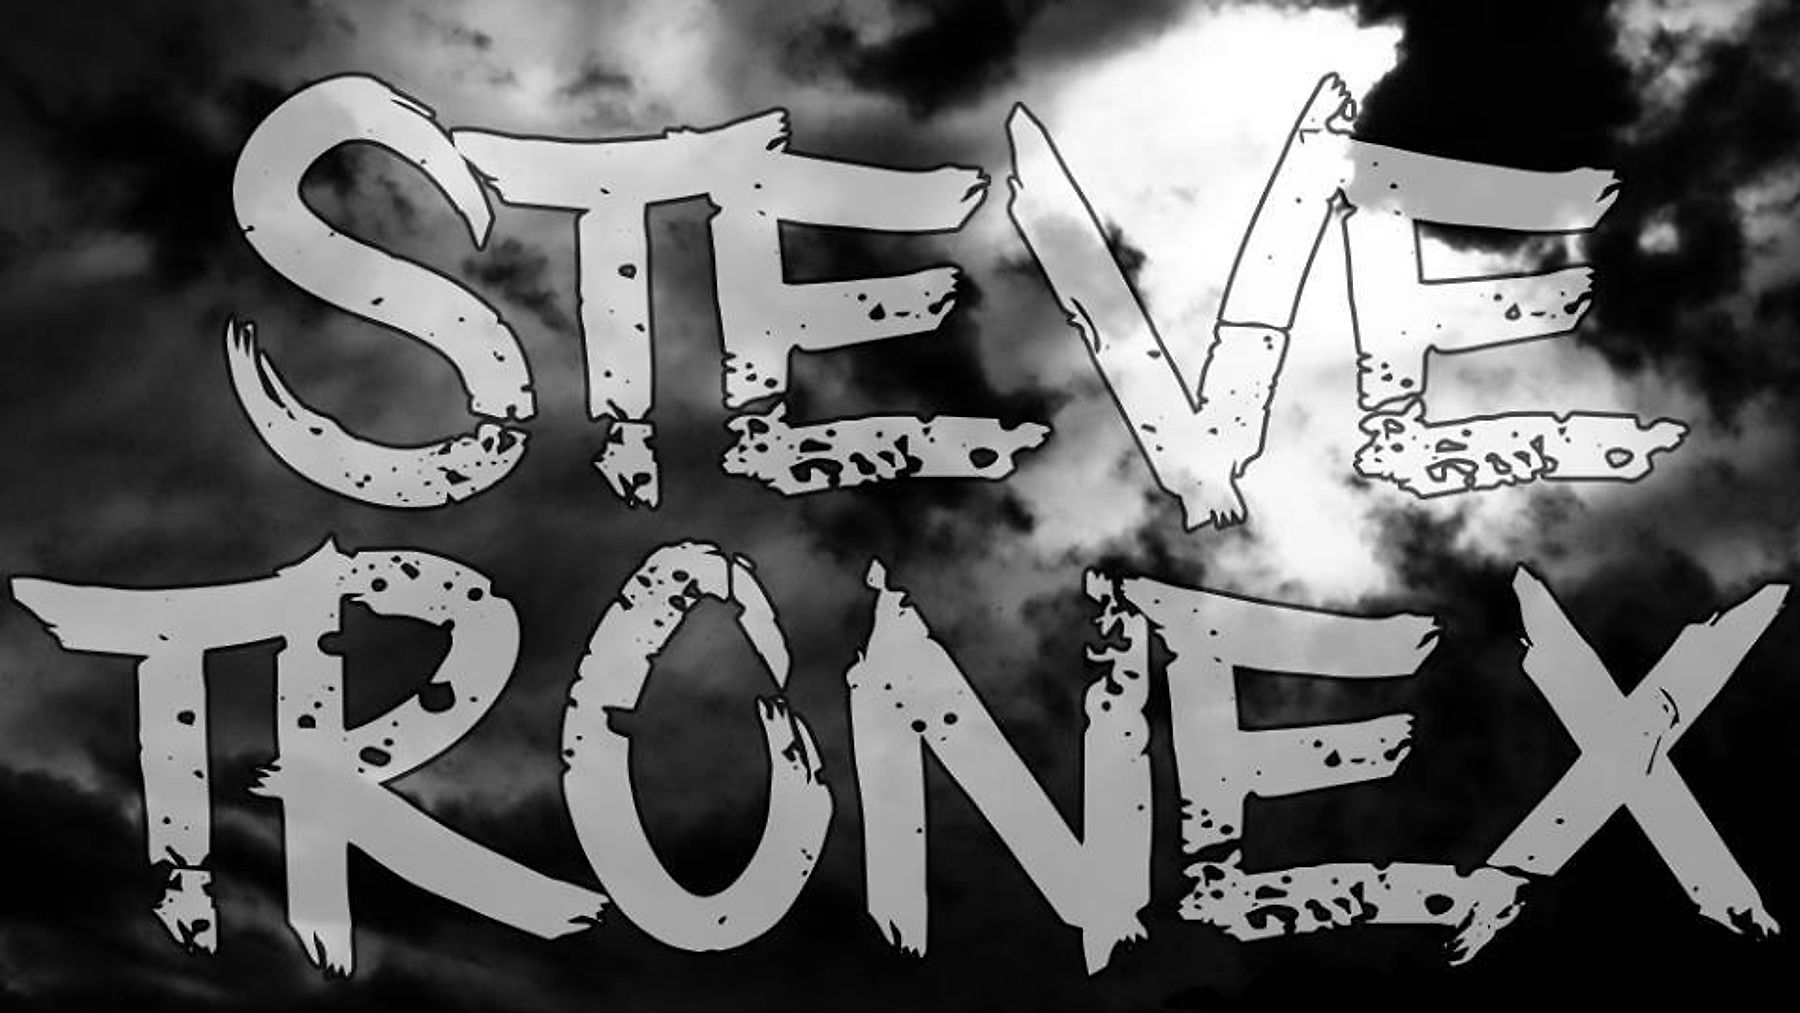 Steve Tronex Music